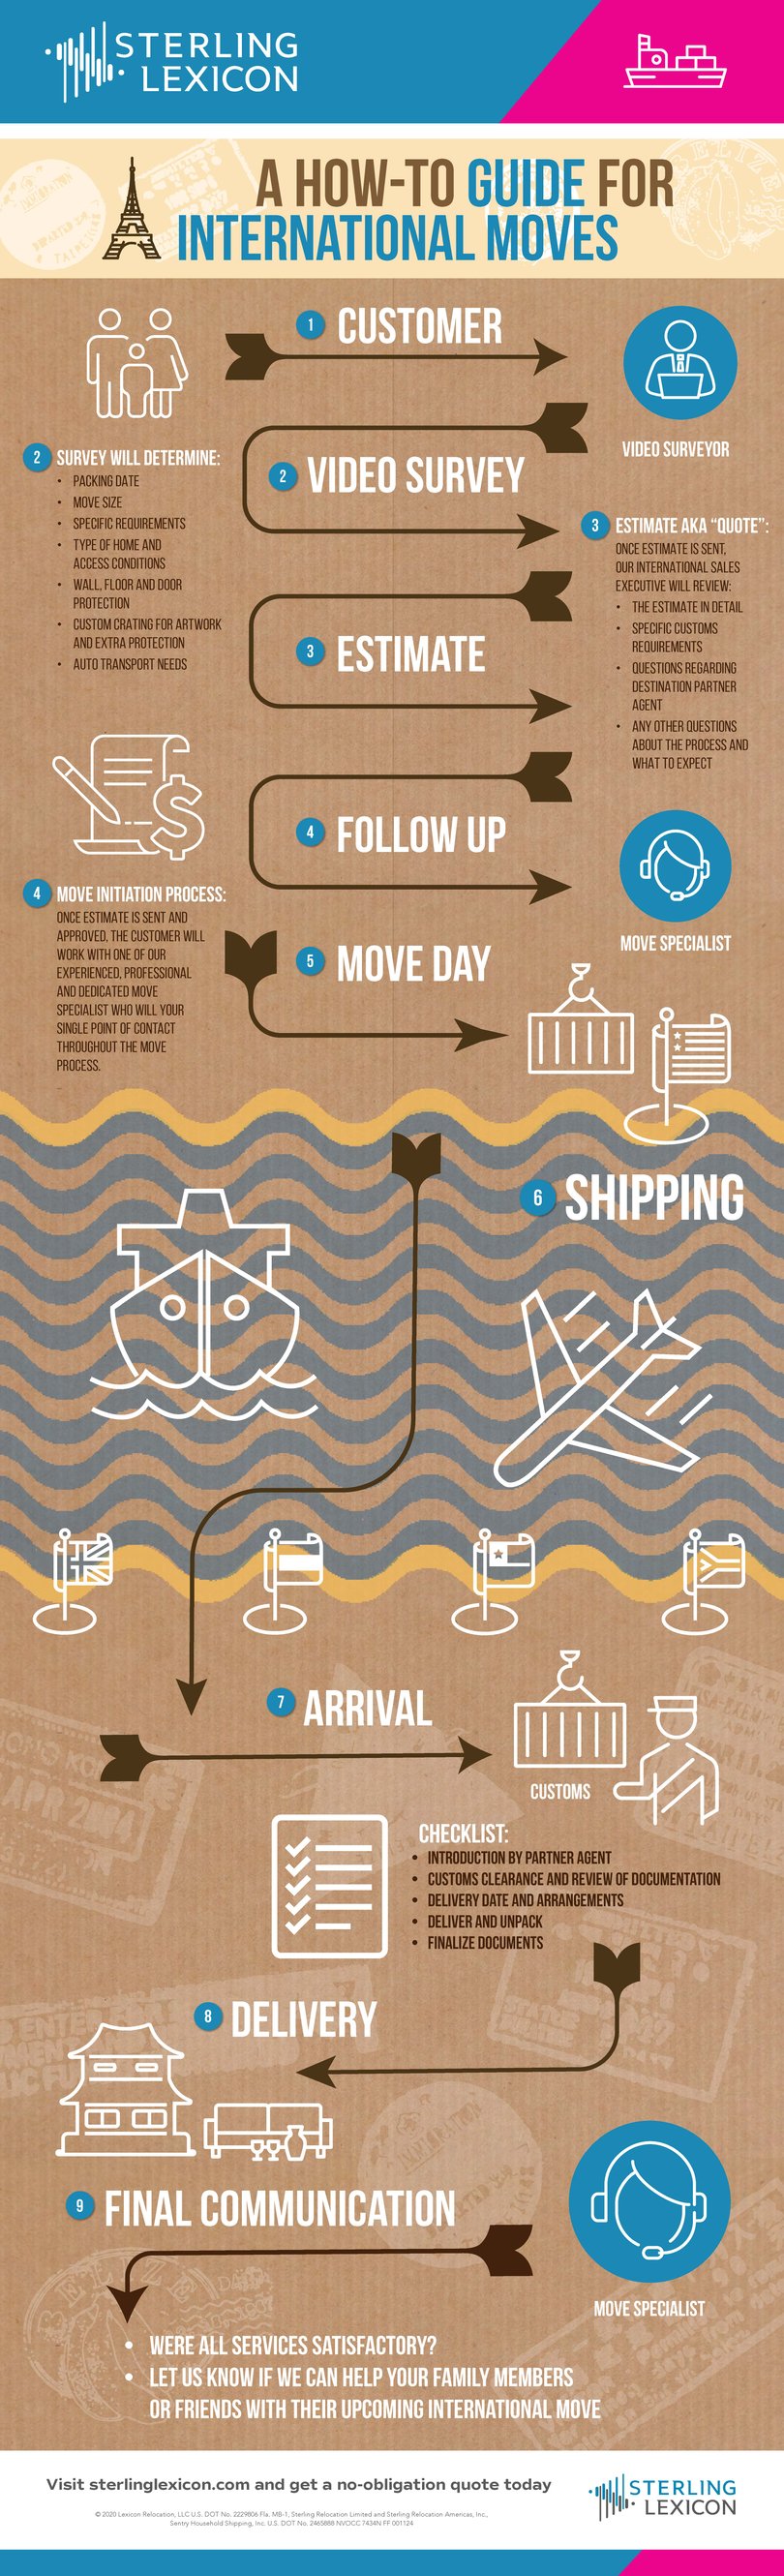 sterlex international moving process infographic